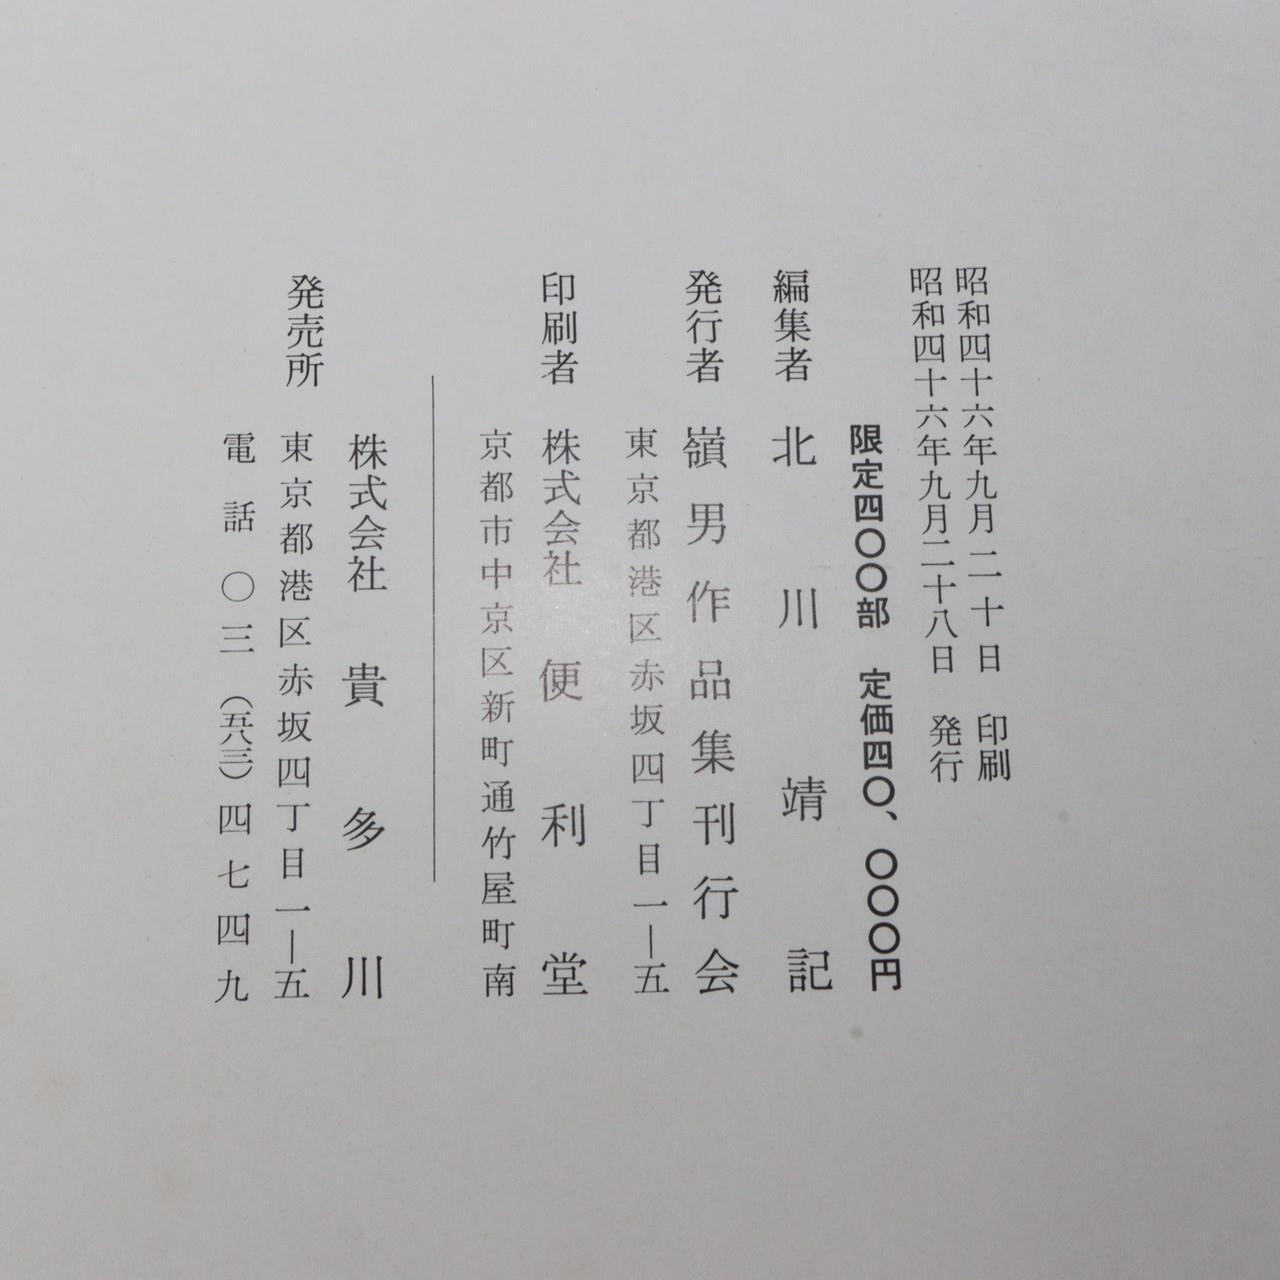 Japanese ceramic Collection Book Okabe Mineo ASO195